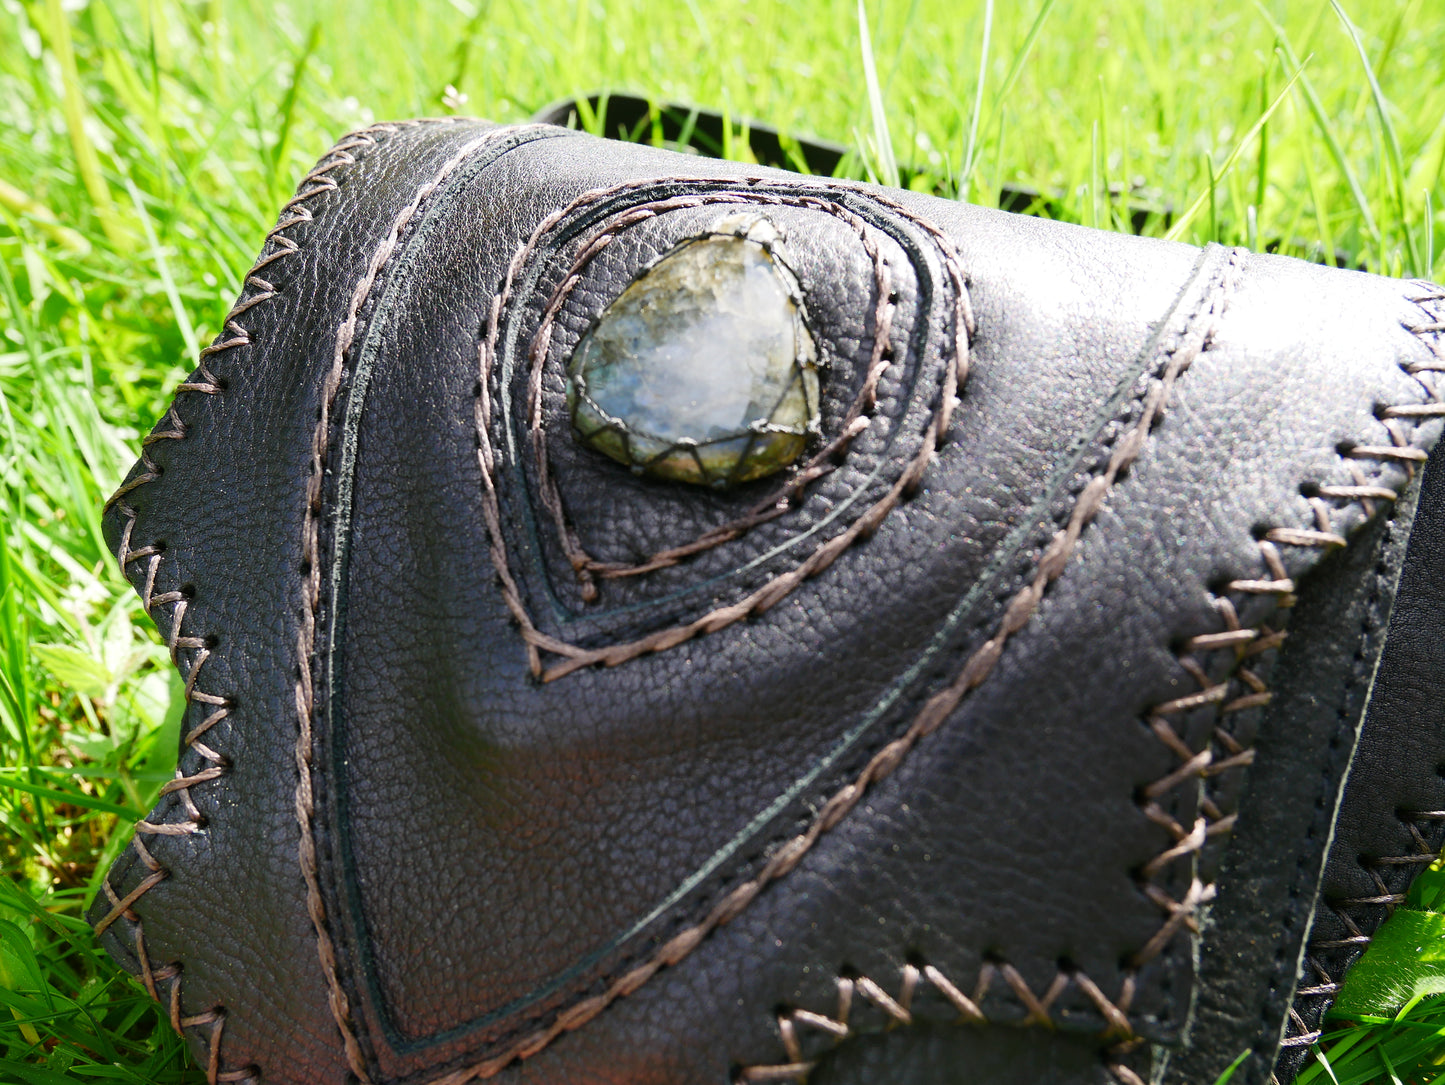 Handmade leather hip bag - waist bag with real gem stone and hook closure